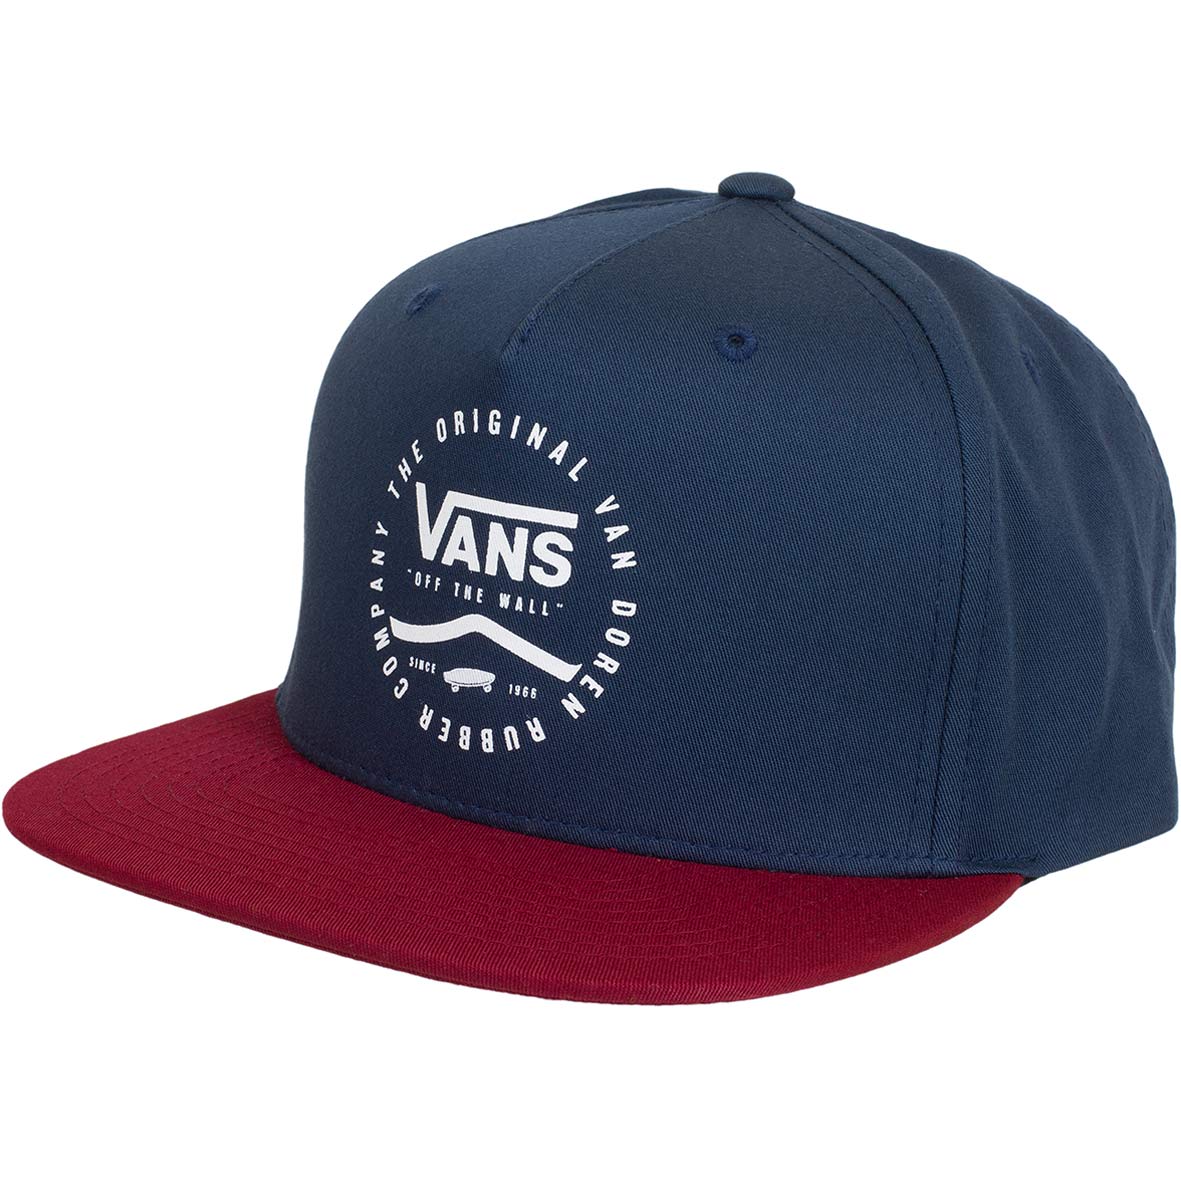 ☆ Vans Snapback Cap Side Stripe dunkelblau/rot - hier bestellen!